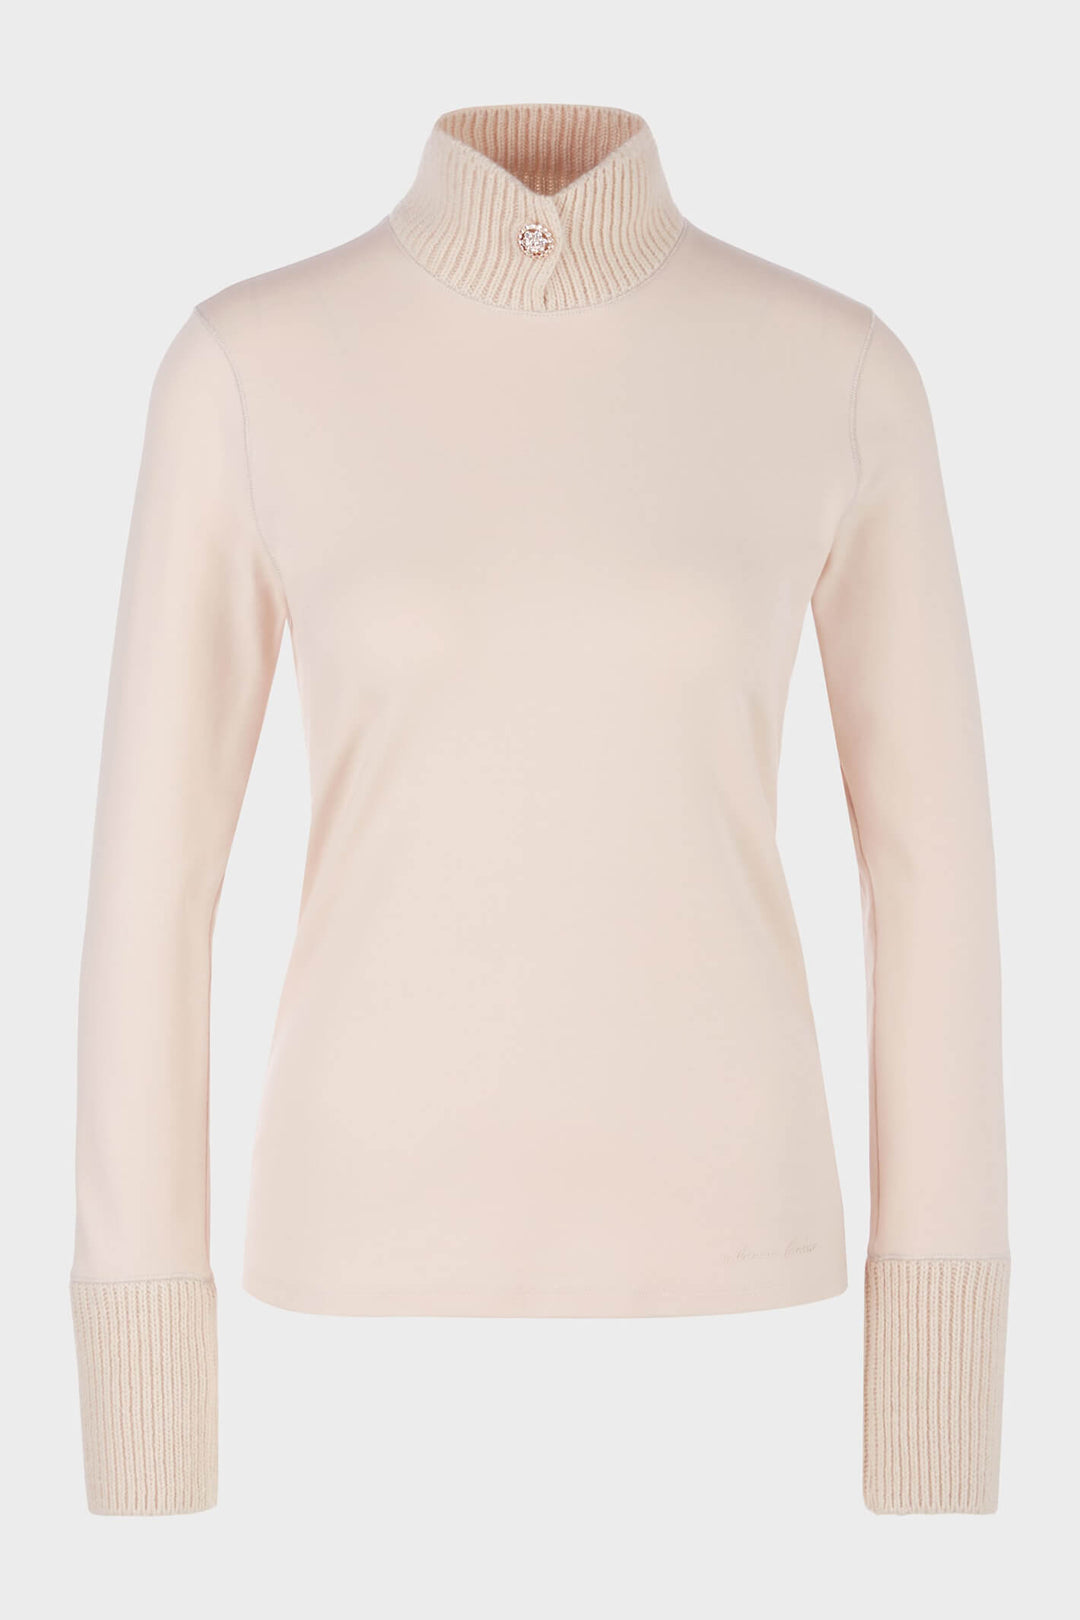 Marc Cain Collections VC 48.25 J71 157 Soft Blossom T-Shirt - Olivia Grace Fashion